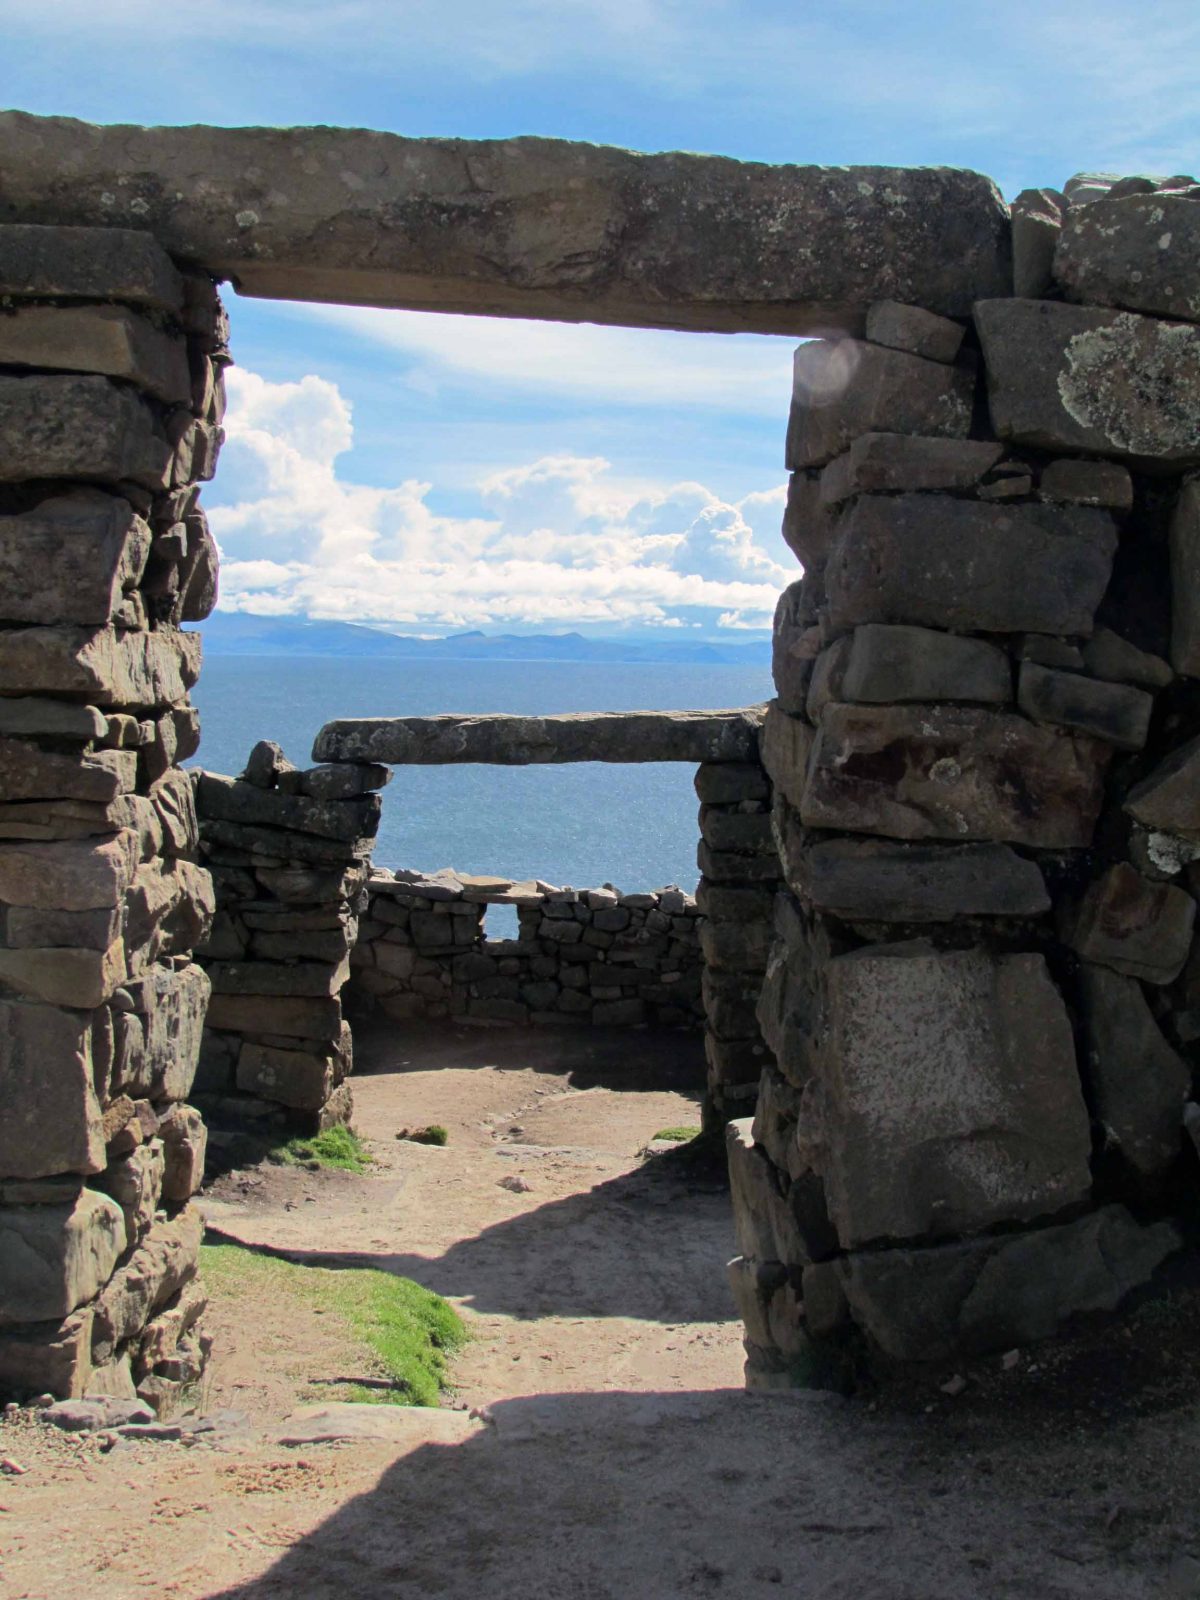 Archways at the Chicana ruins, Isla del Sol, Bolivia | ©Angela Drake